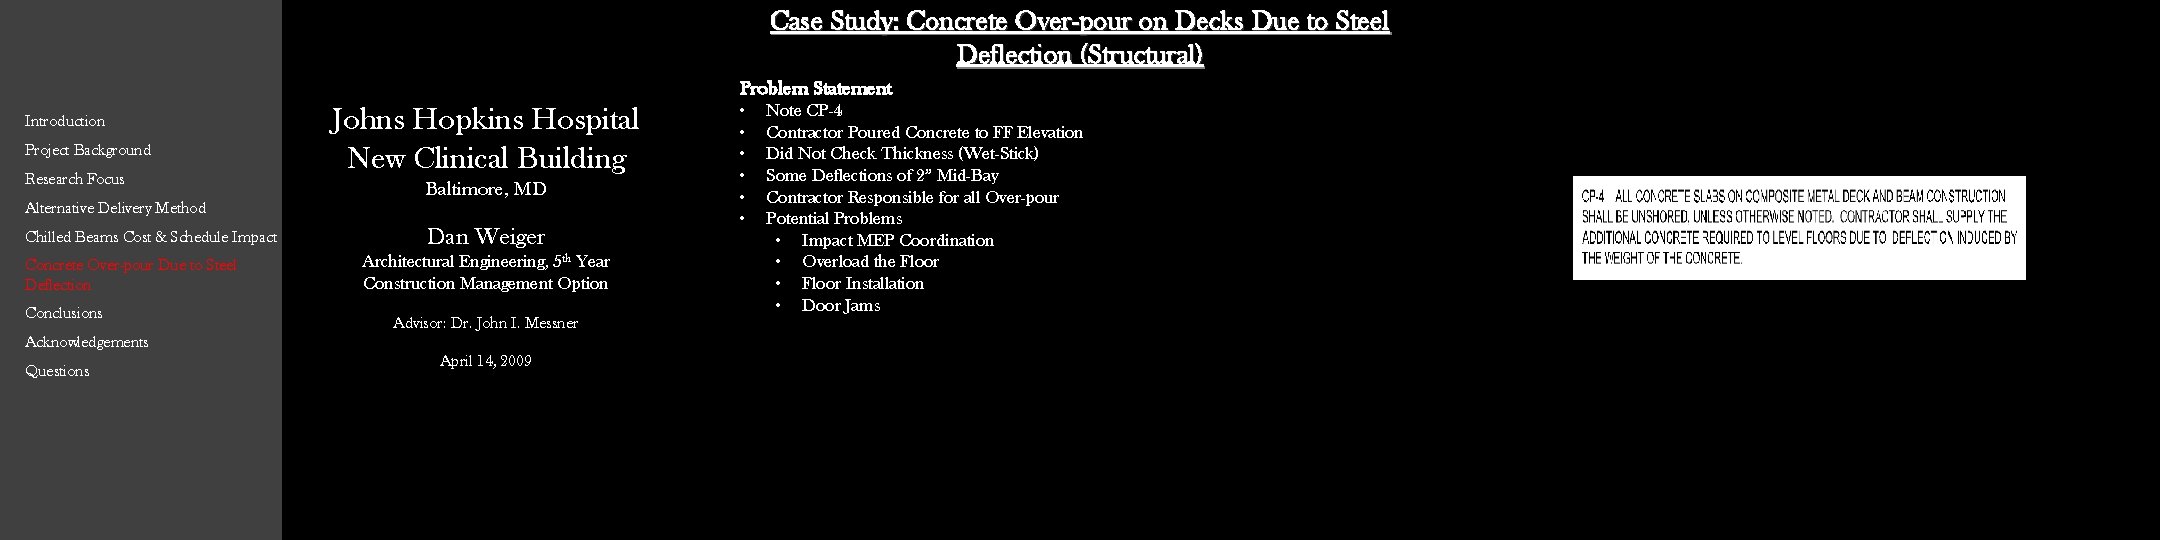 Case Study: Concrete Over-pour on Decks Due to Steel Deflection (Structural) Problem Statement Introduction